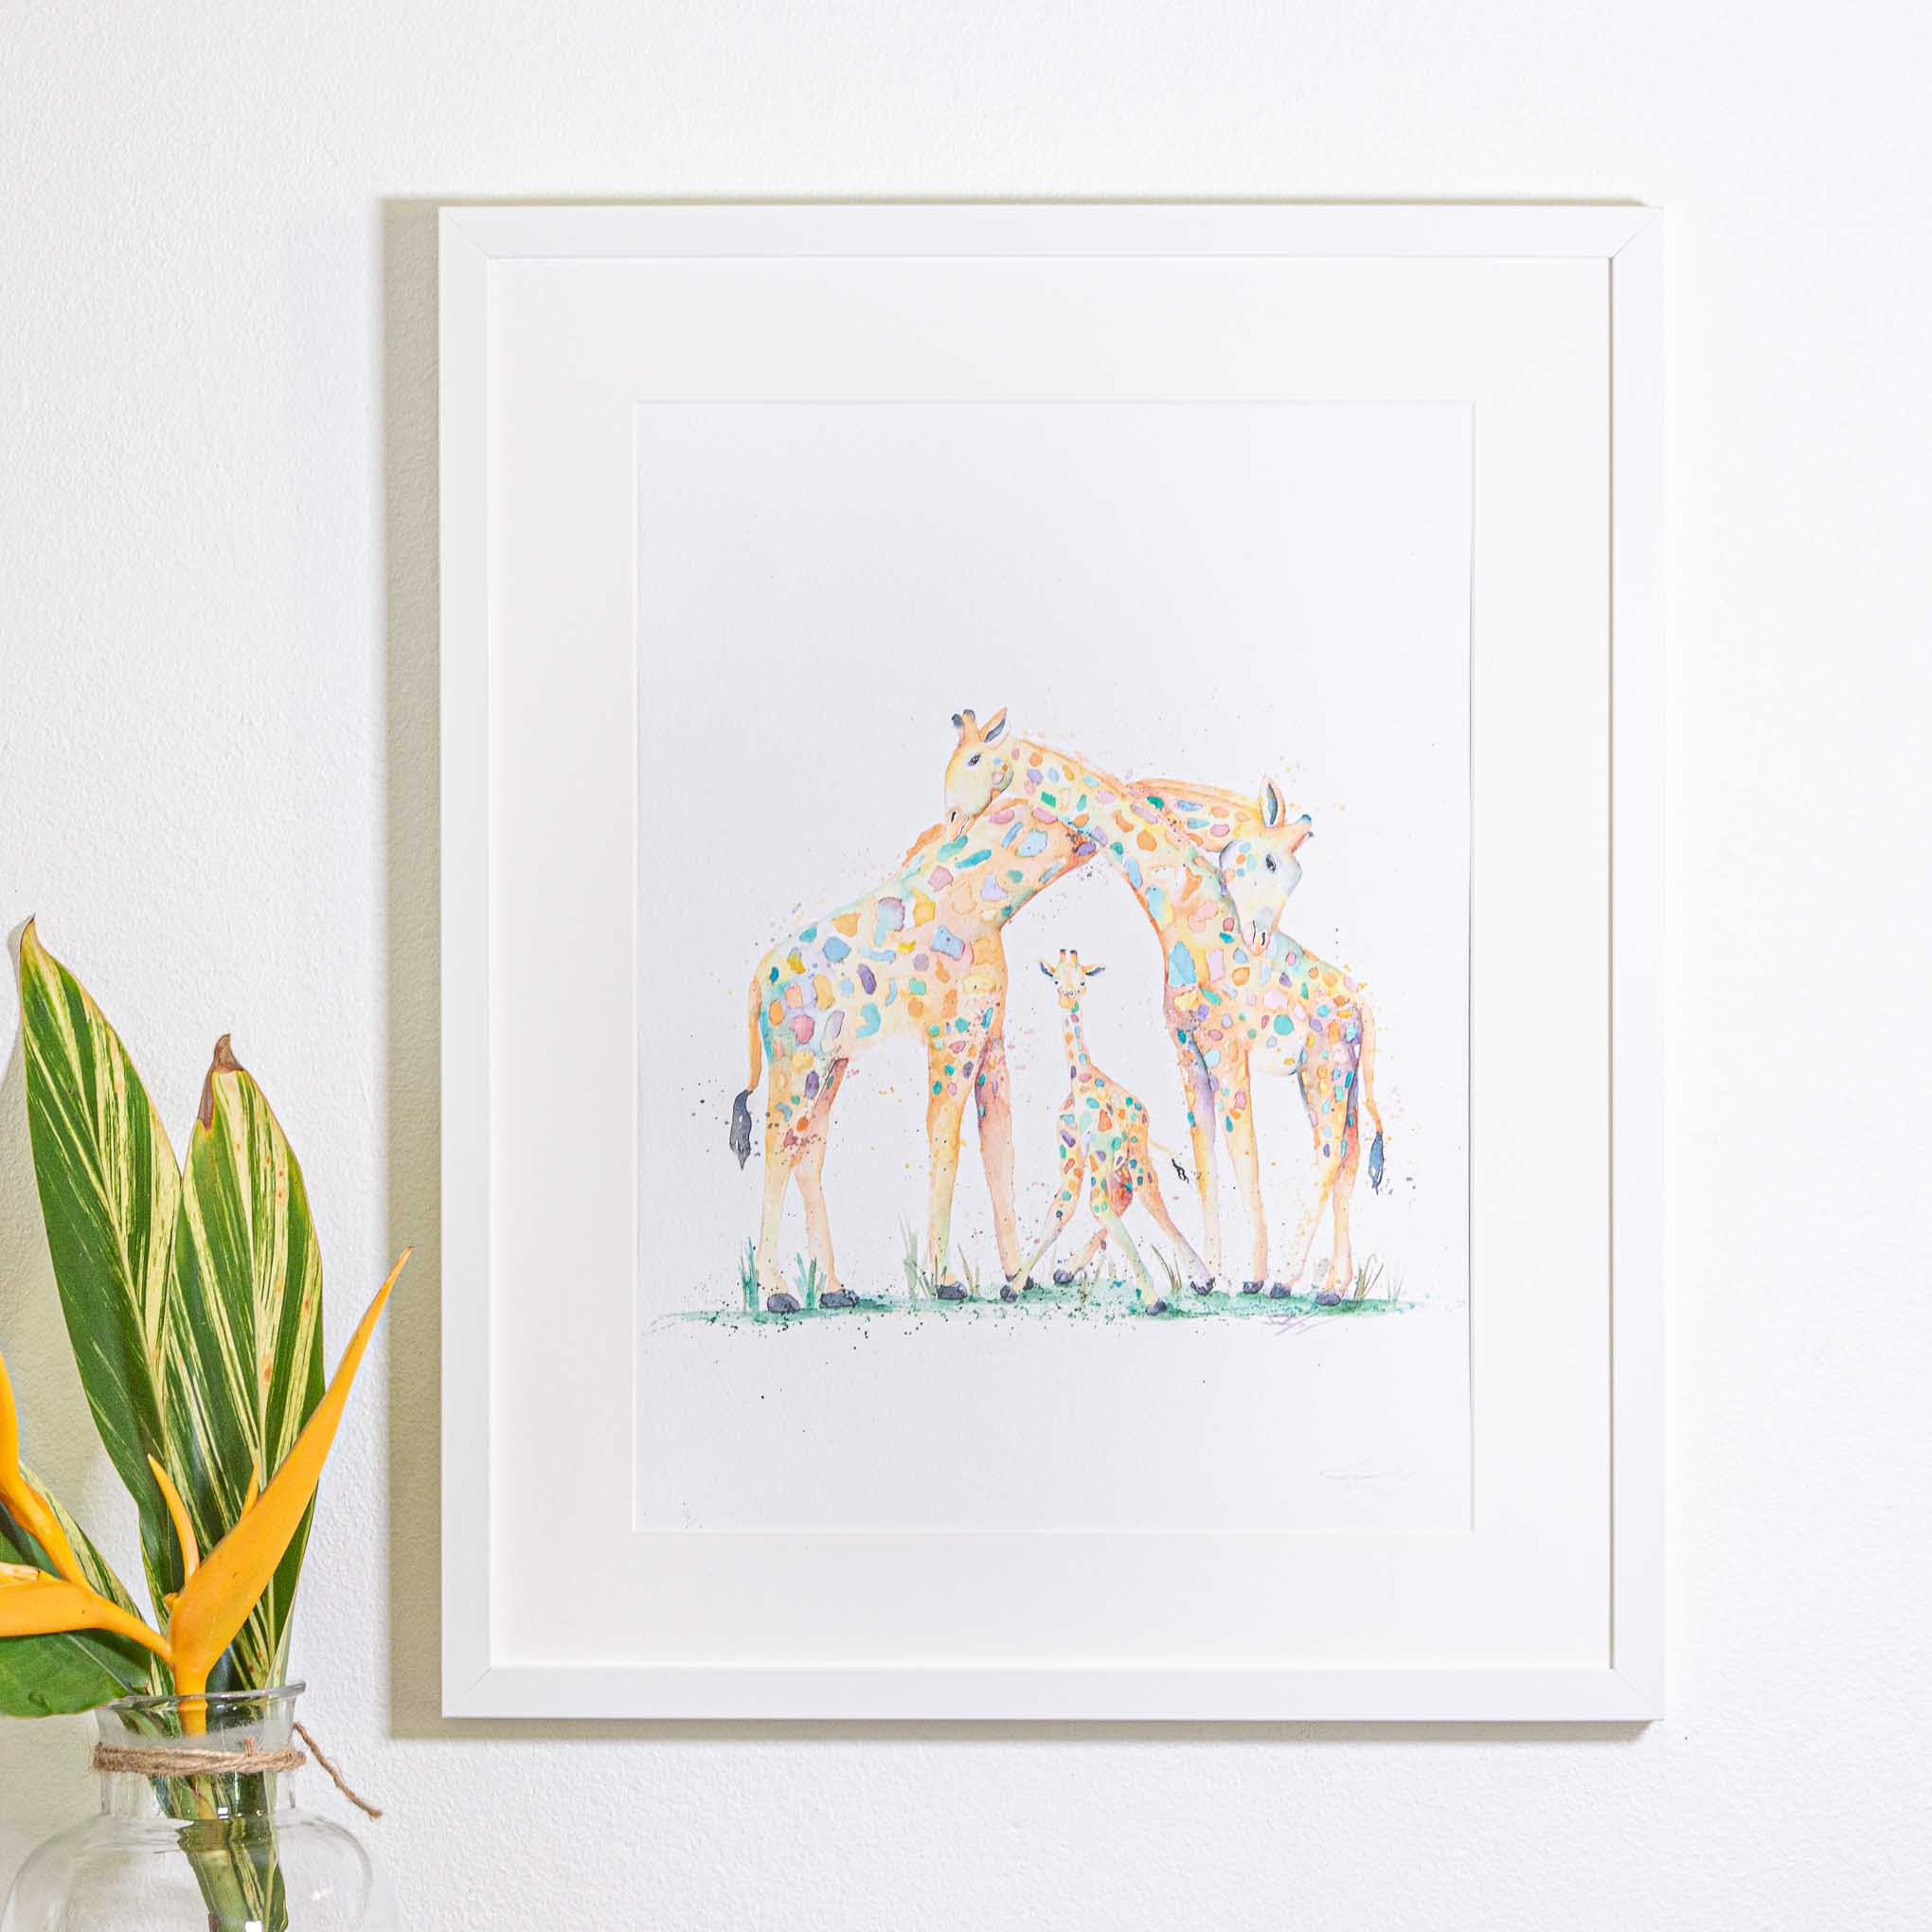 A3 giraffe print in watercolour by Stephanie Elizabeth Artwork